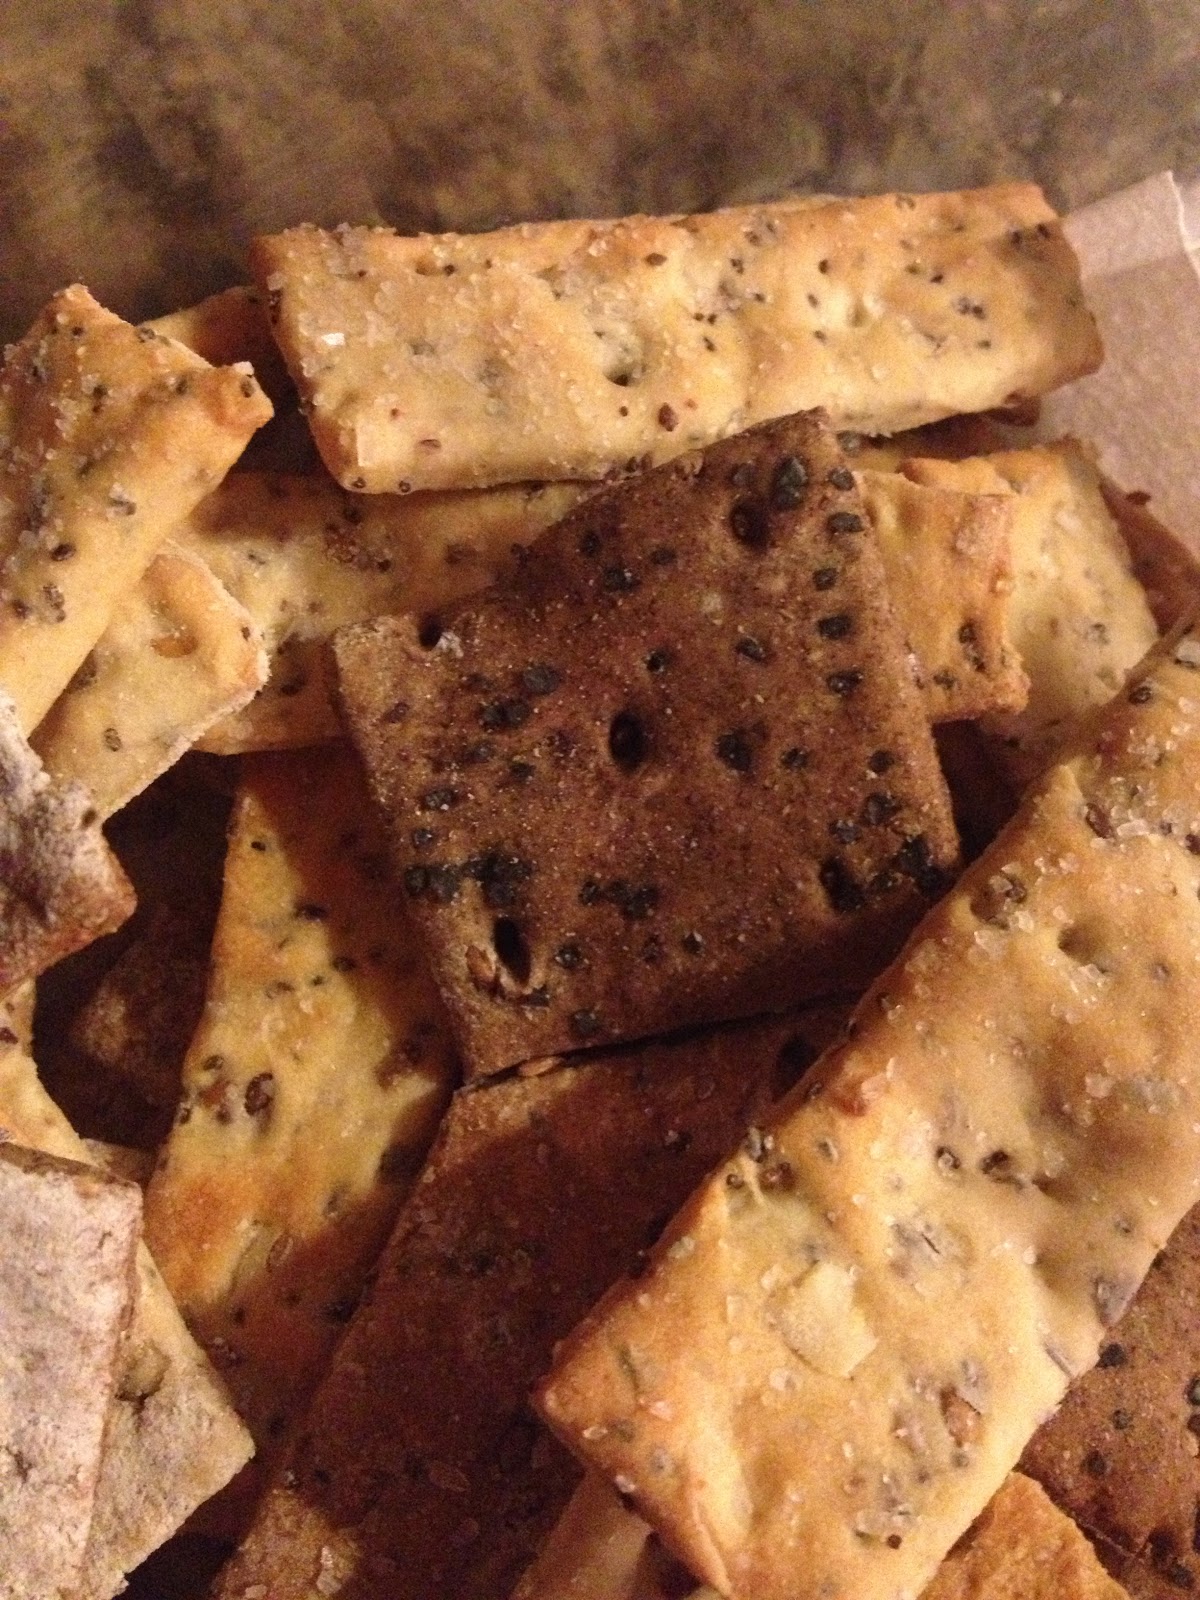 Third Sunday Dinner Blog: Whole Grain Crackers, Tasty, Easy, and Good ...